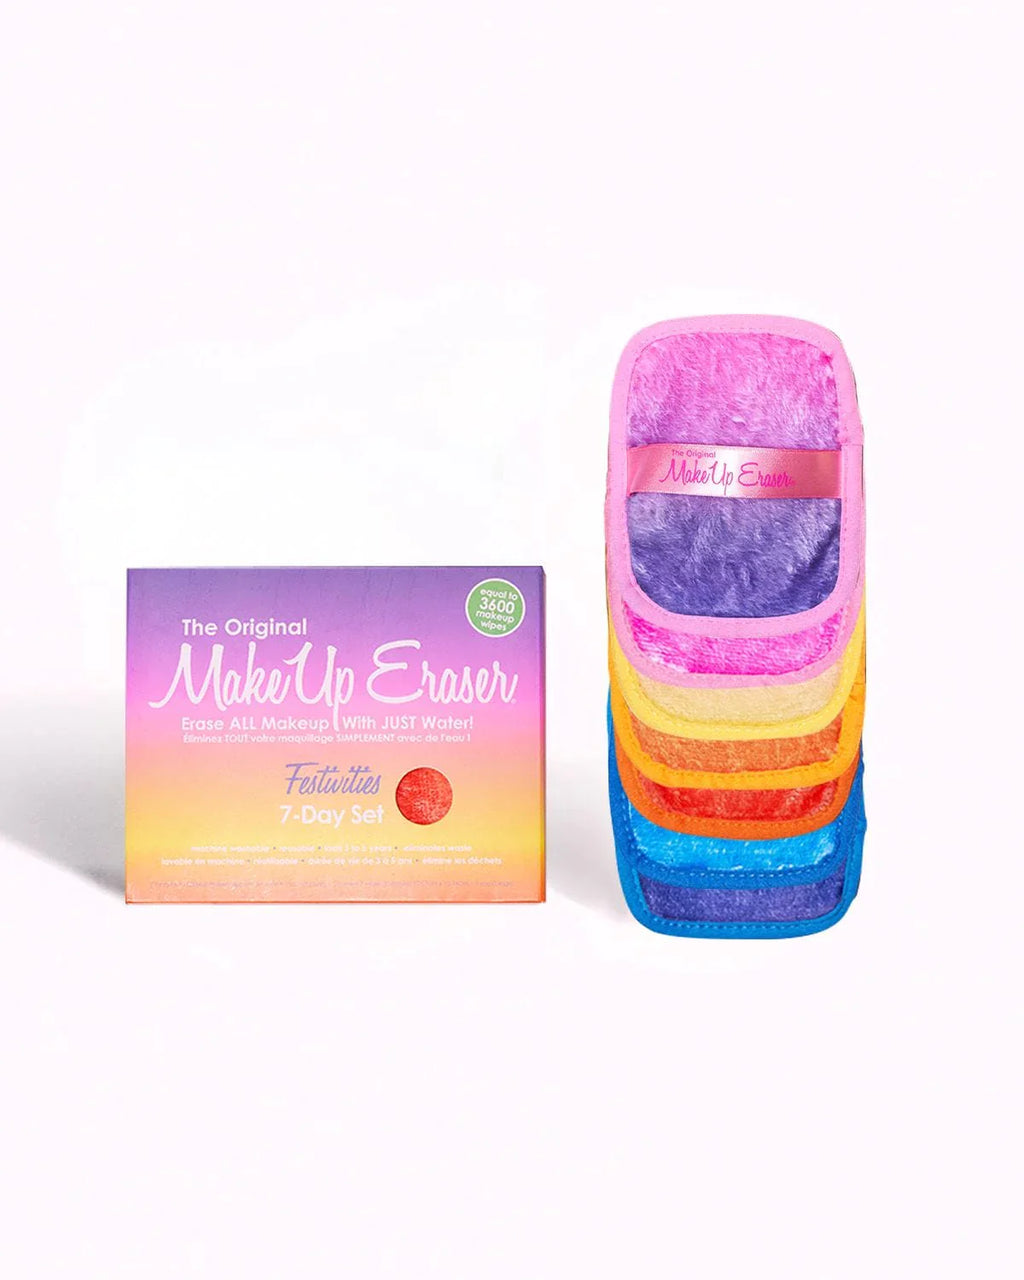 The Original make up eraser - Festivites - 7 day set-Face Products-ellënoire body, bath fragrance & curly hair